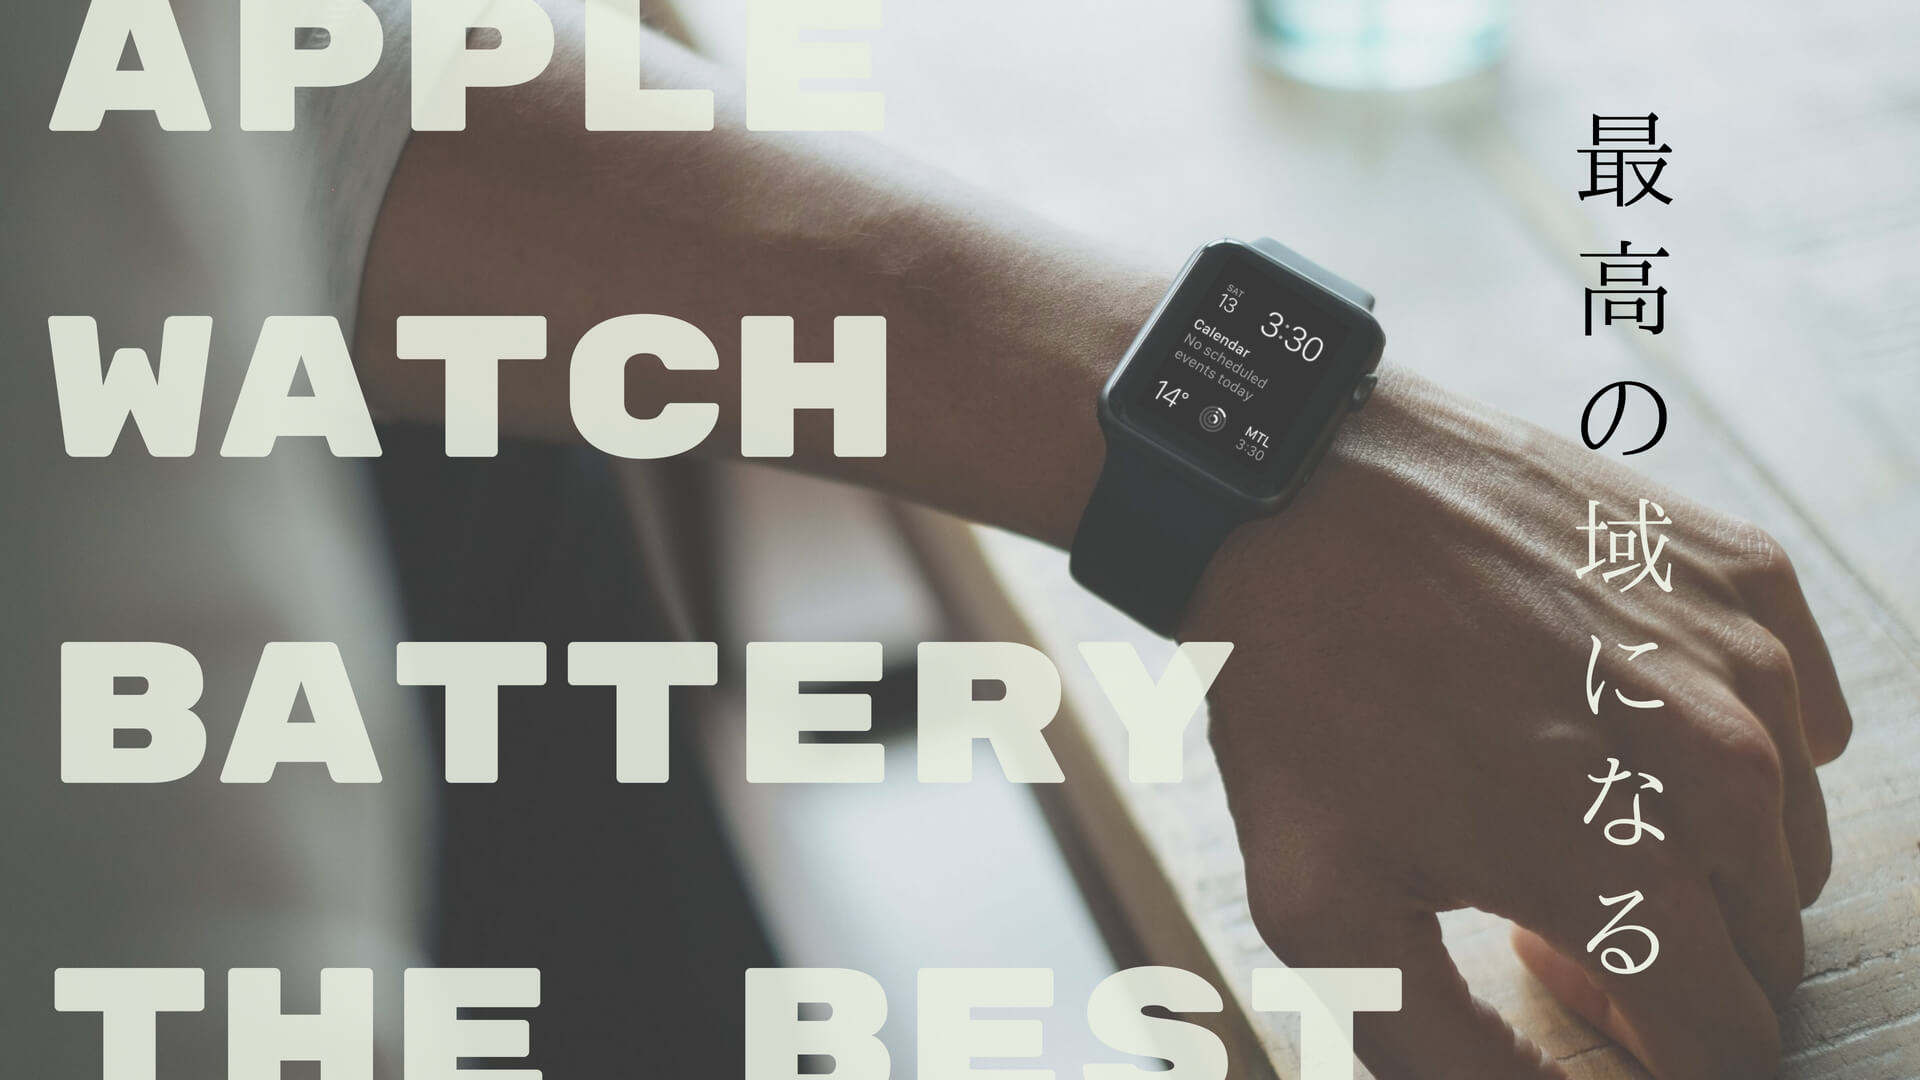 Apple watch(アップルウォッチ)の稼働時間とバッテリー容量を検証!